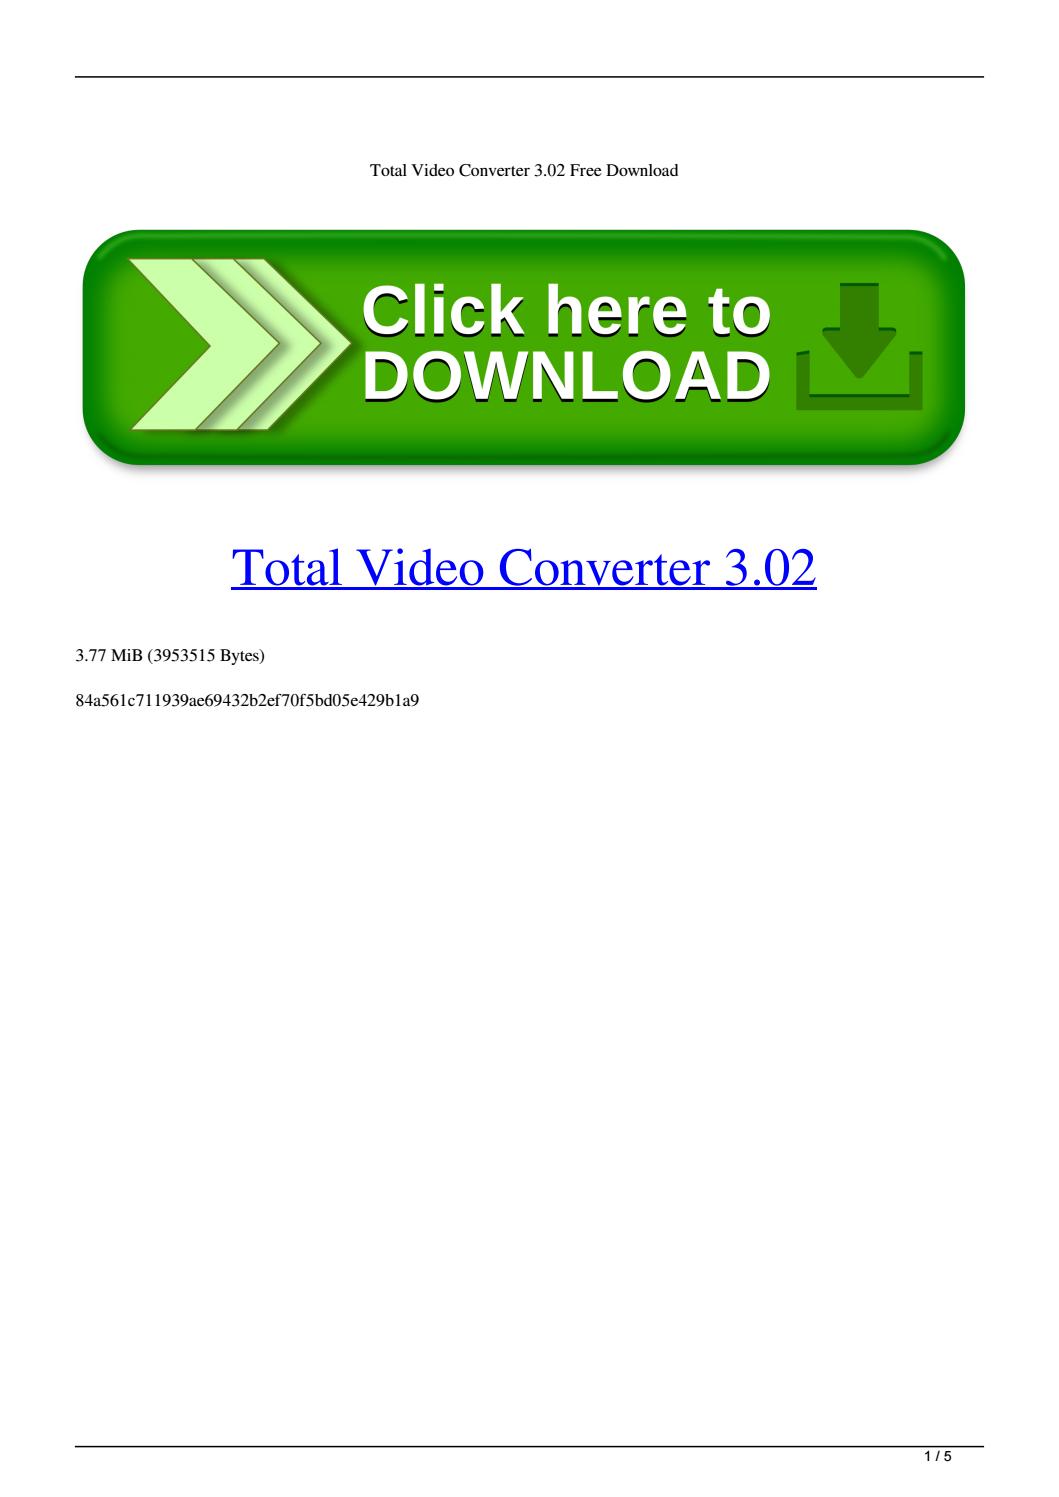 Total Video Converter 3.02 Registration Code Free Download